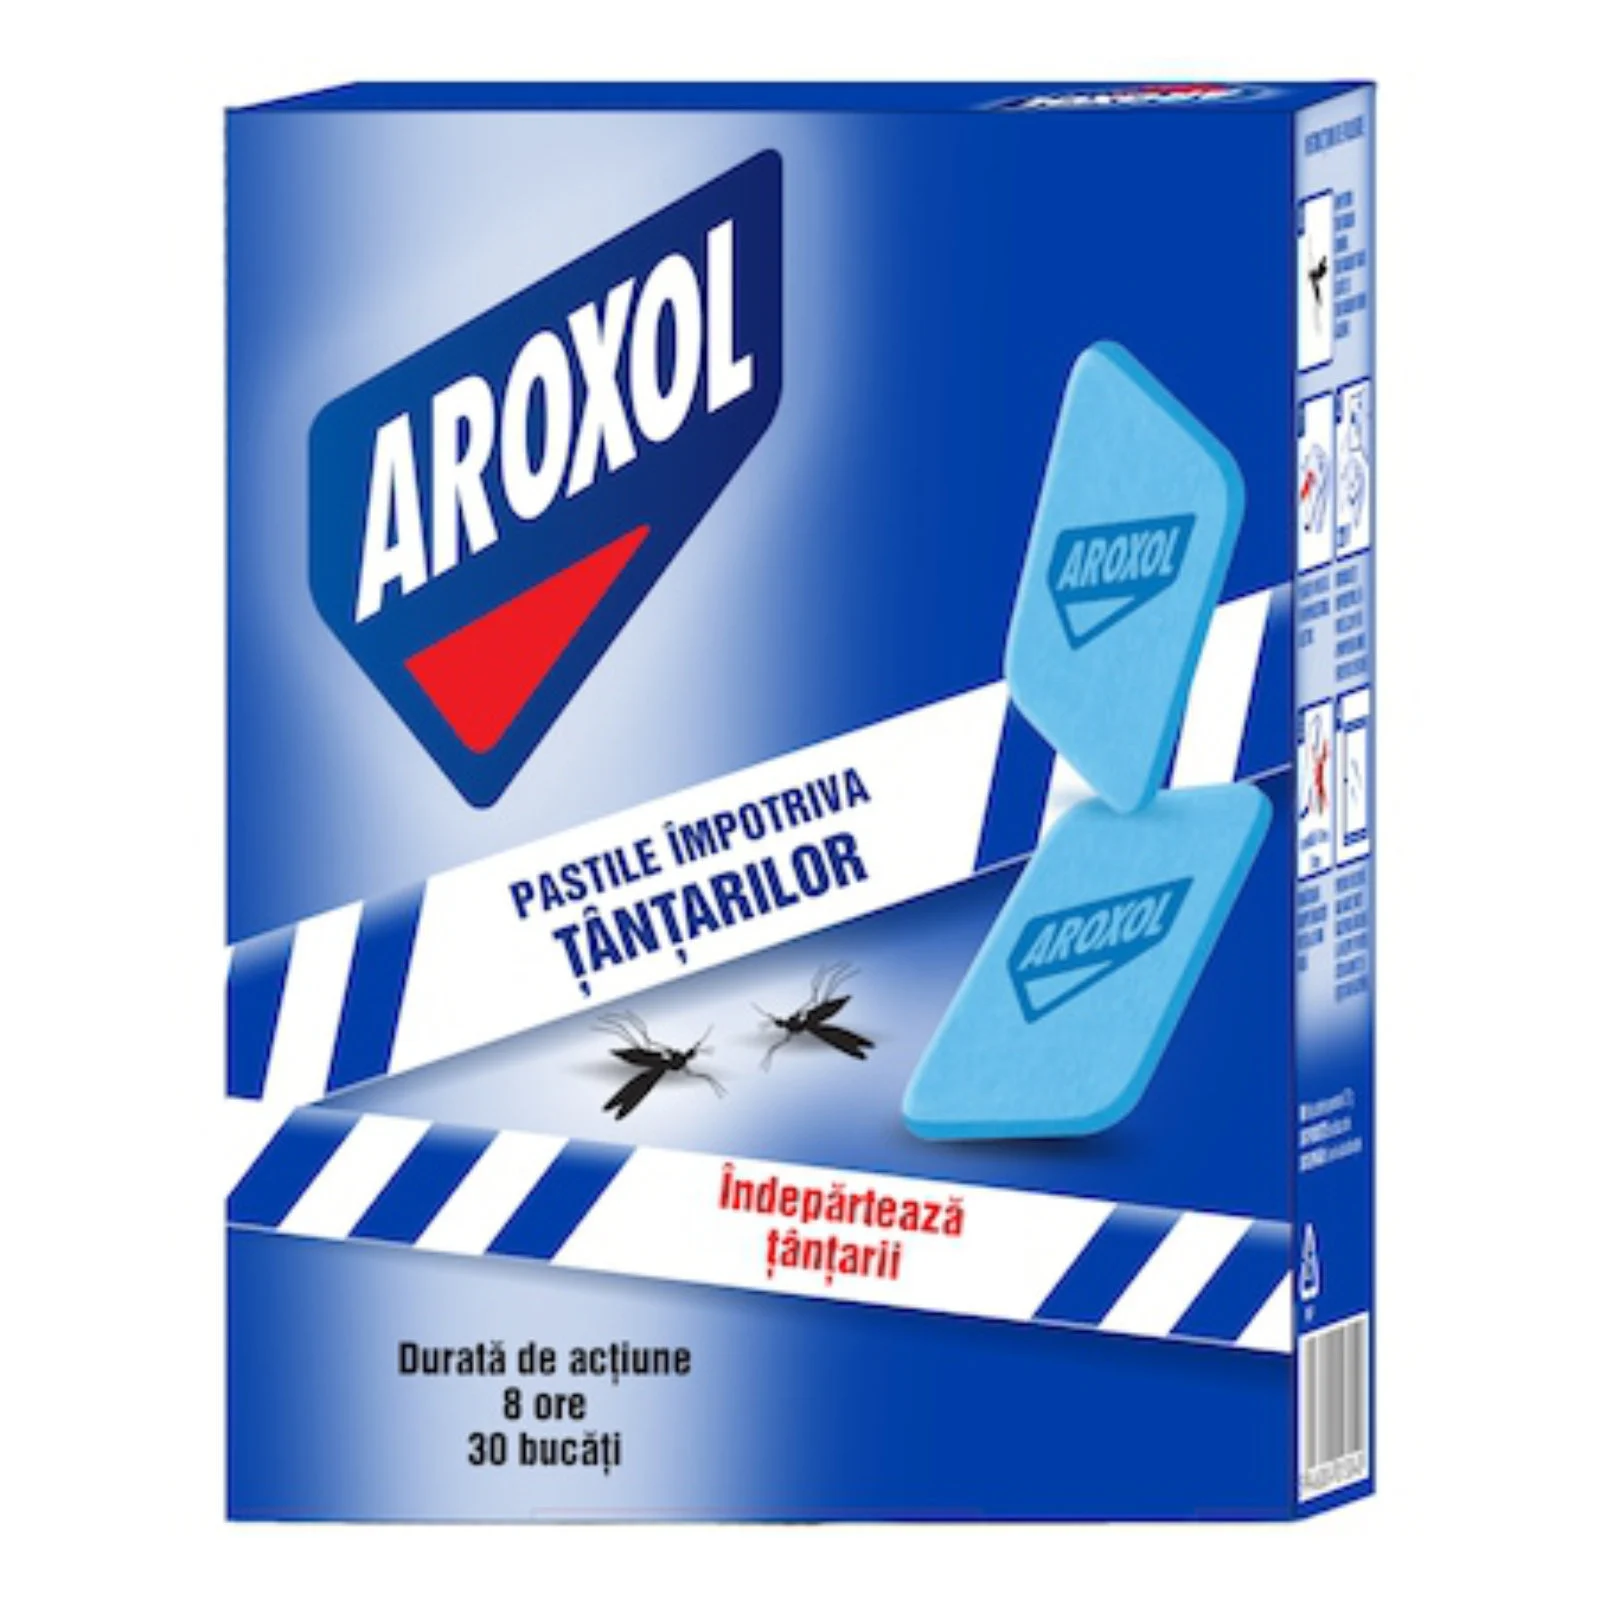 Insecticide - AROXOL PASTILE IMPOTRIVA TANTARILOR 30BUC 12/BAX, lucidiusmarket.ro